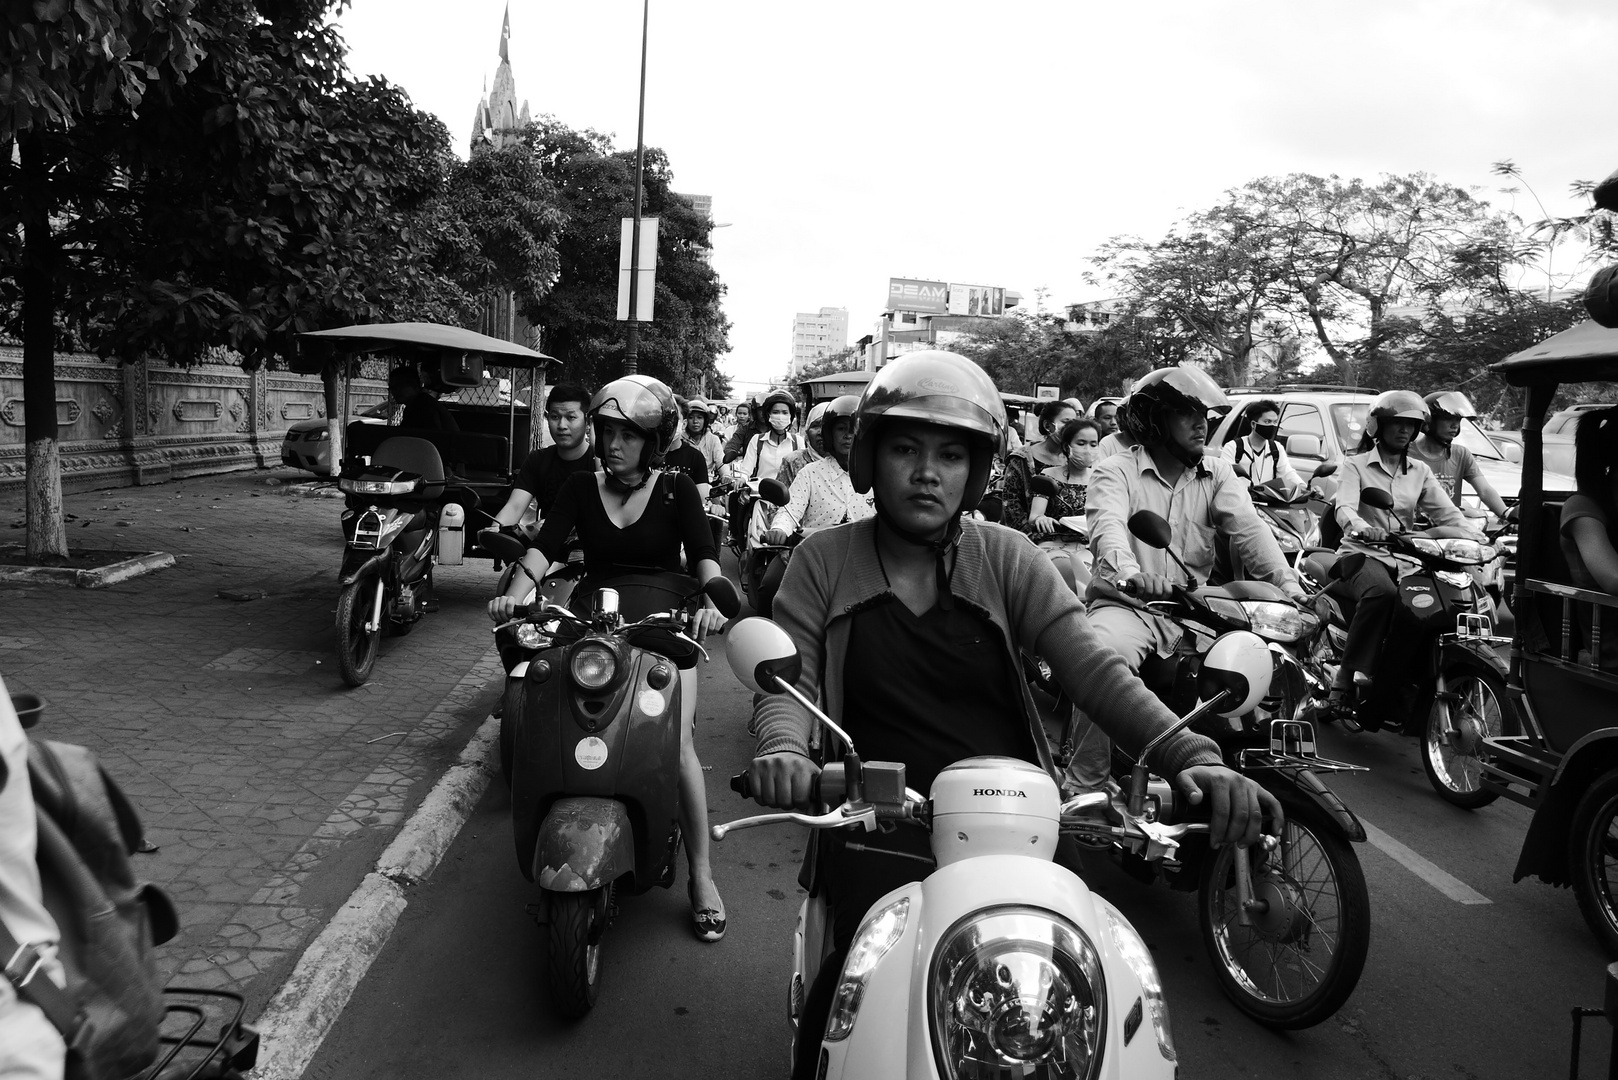 Streets of Phnom Penh